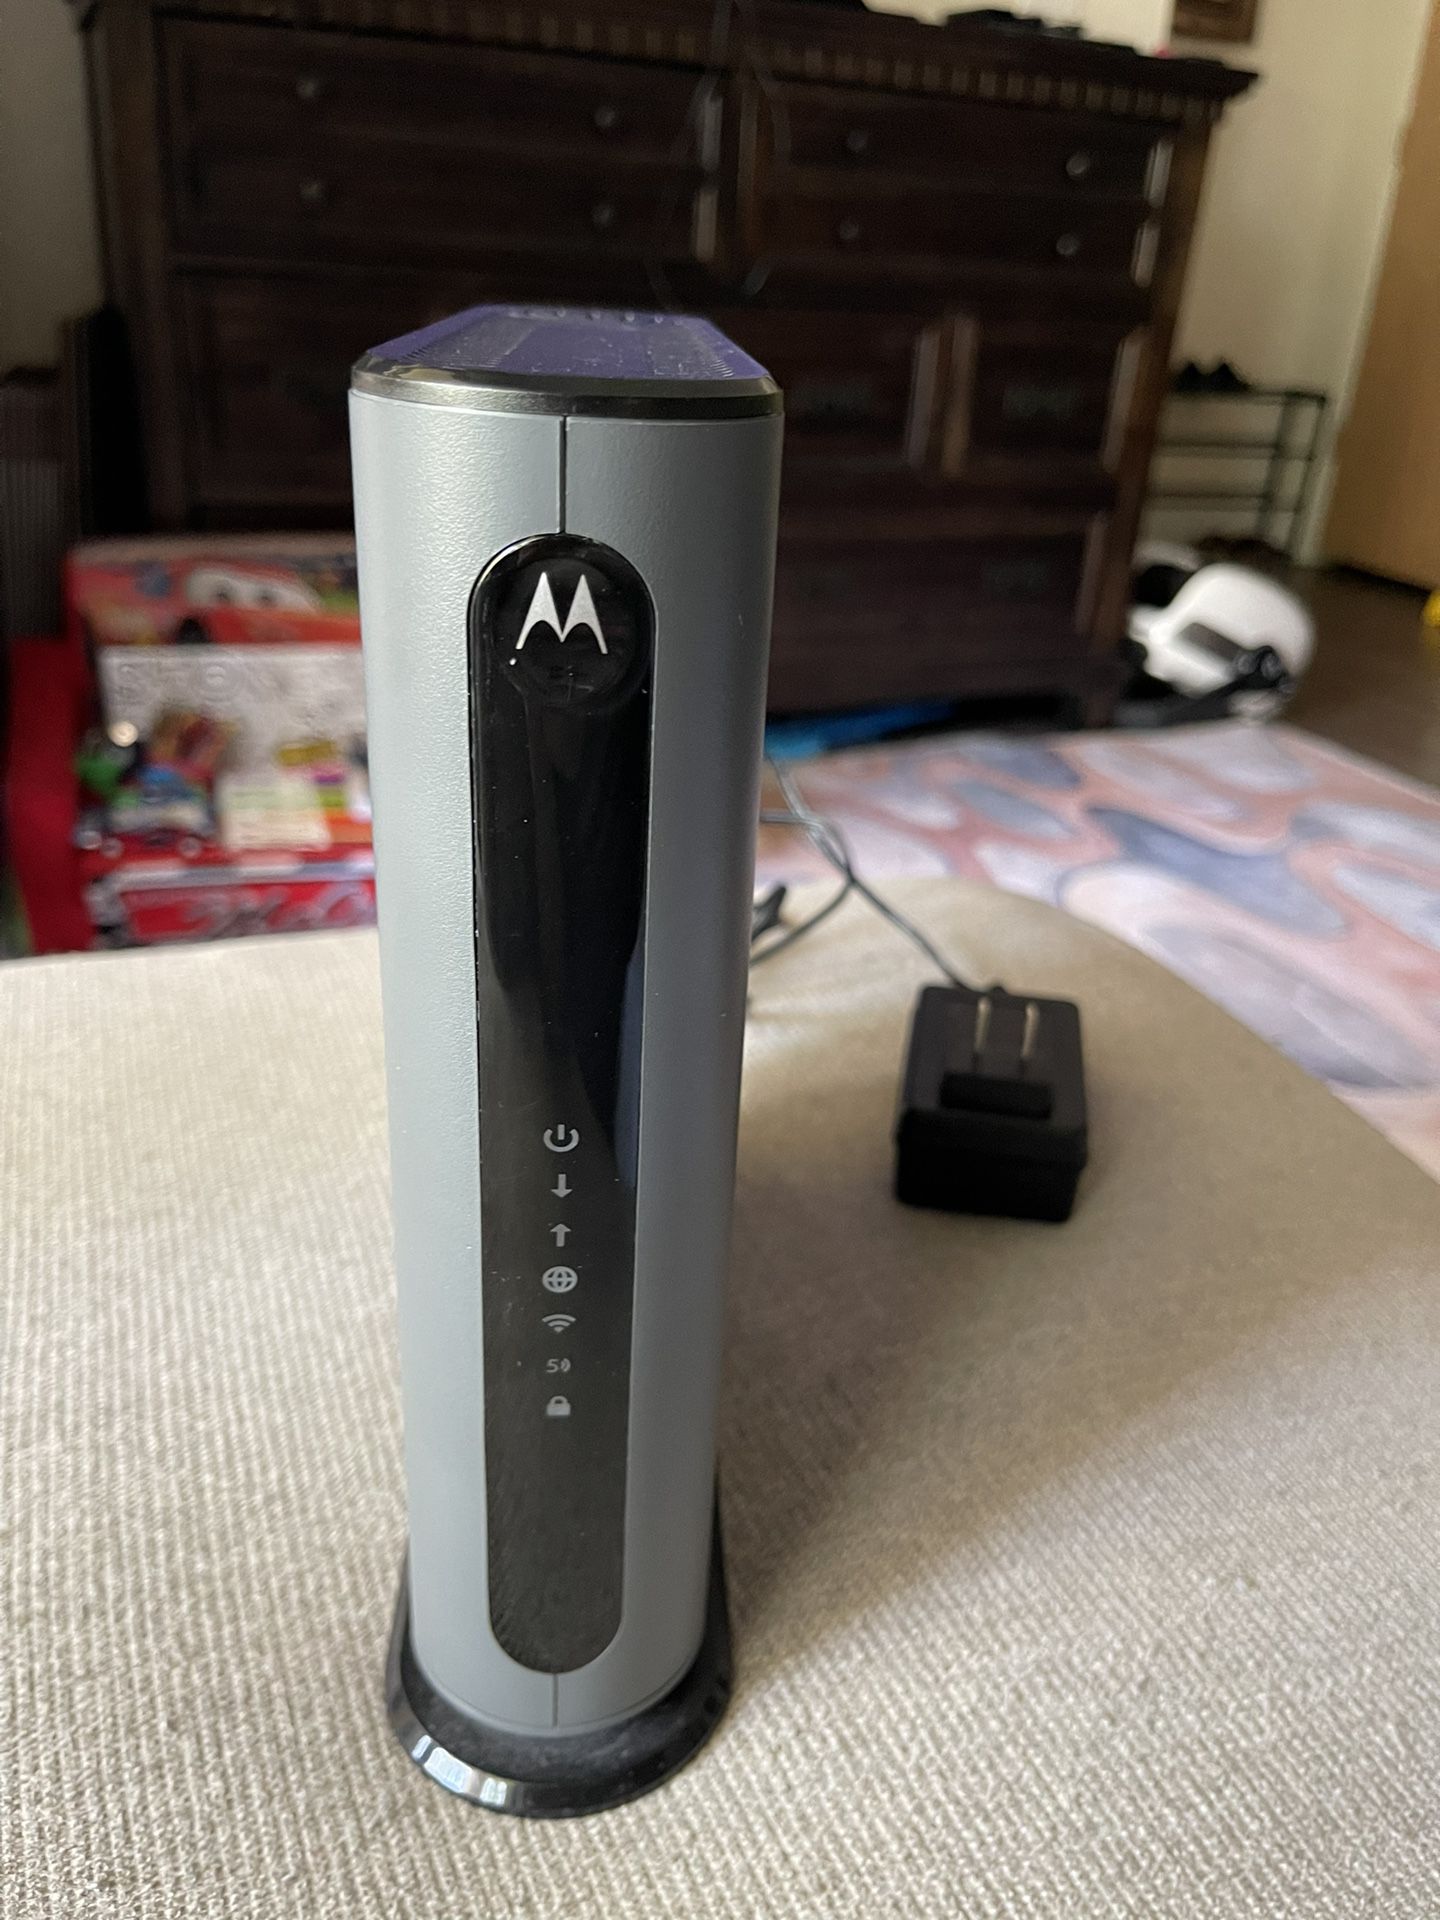 Motorola MG7550 Cable Modem Plus AC1900 WiFi Router